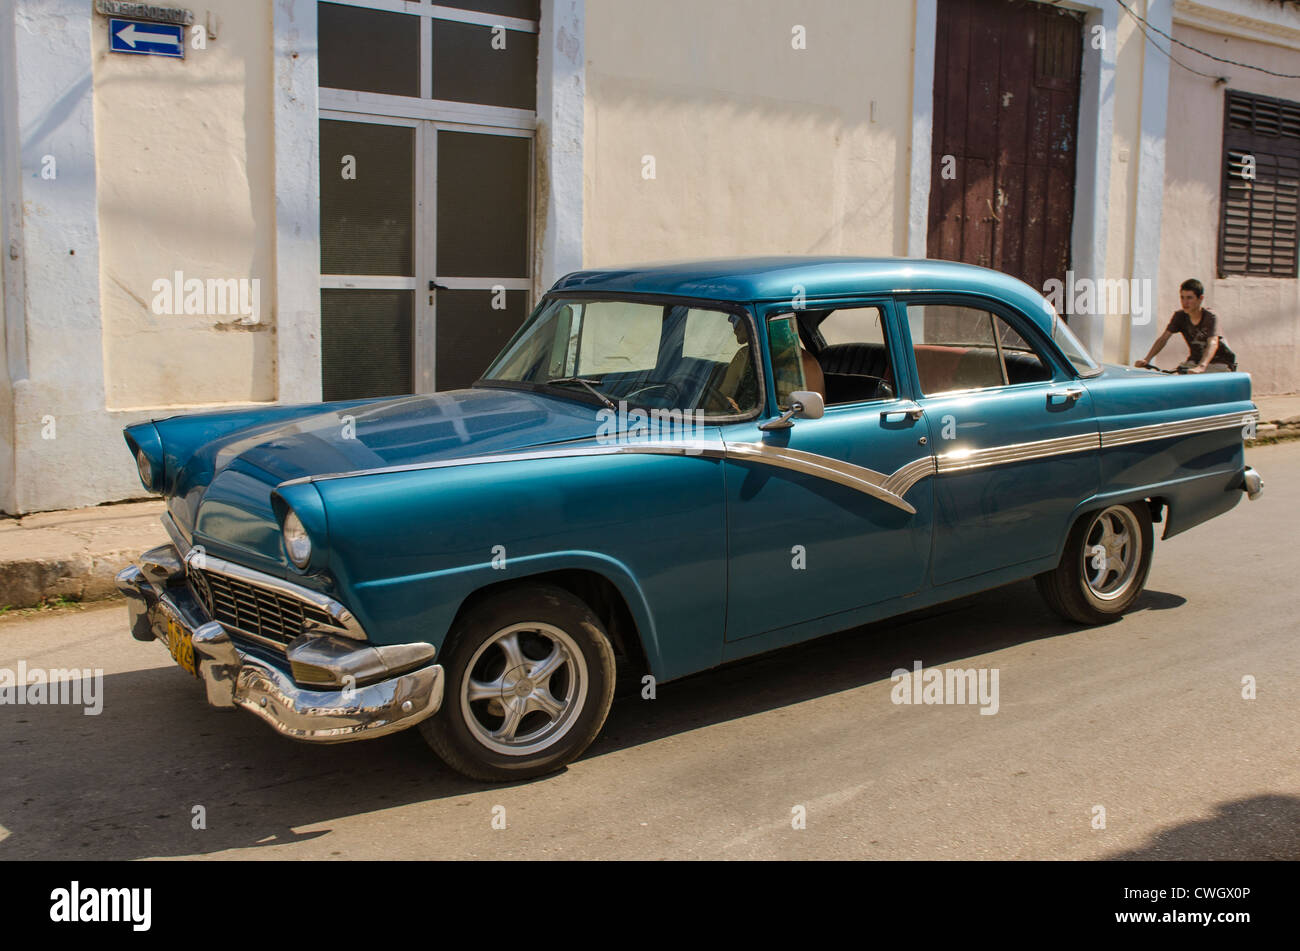 Classic antique 1956 Ford car, Remedios, Cuba. Stock Photo